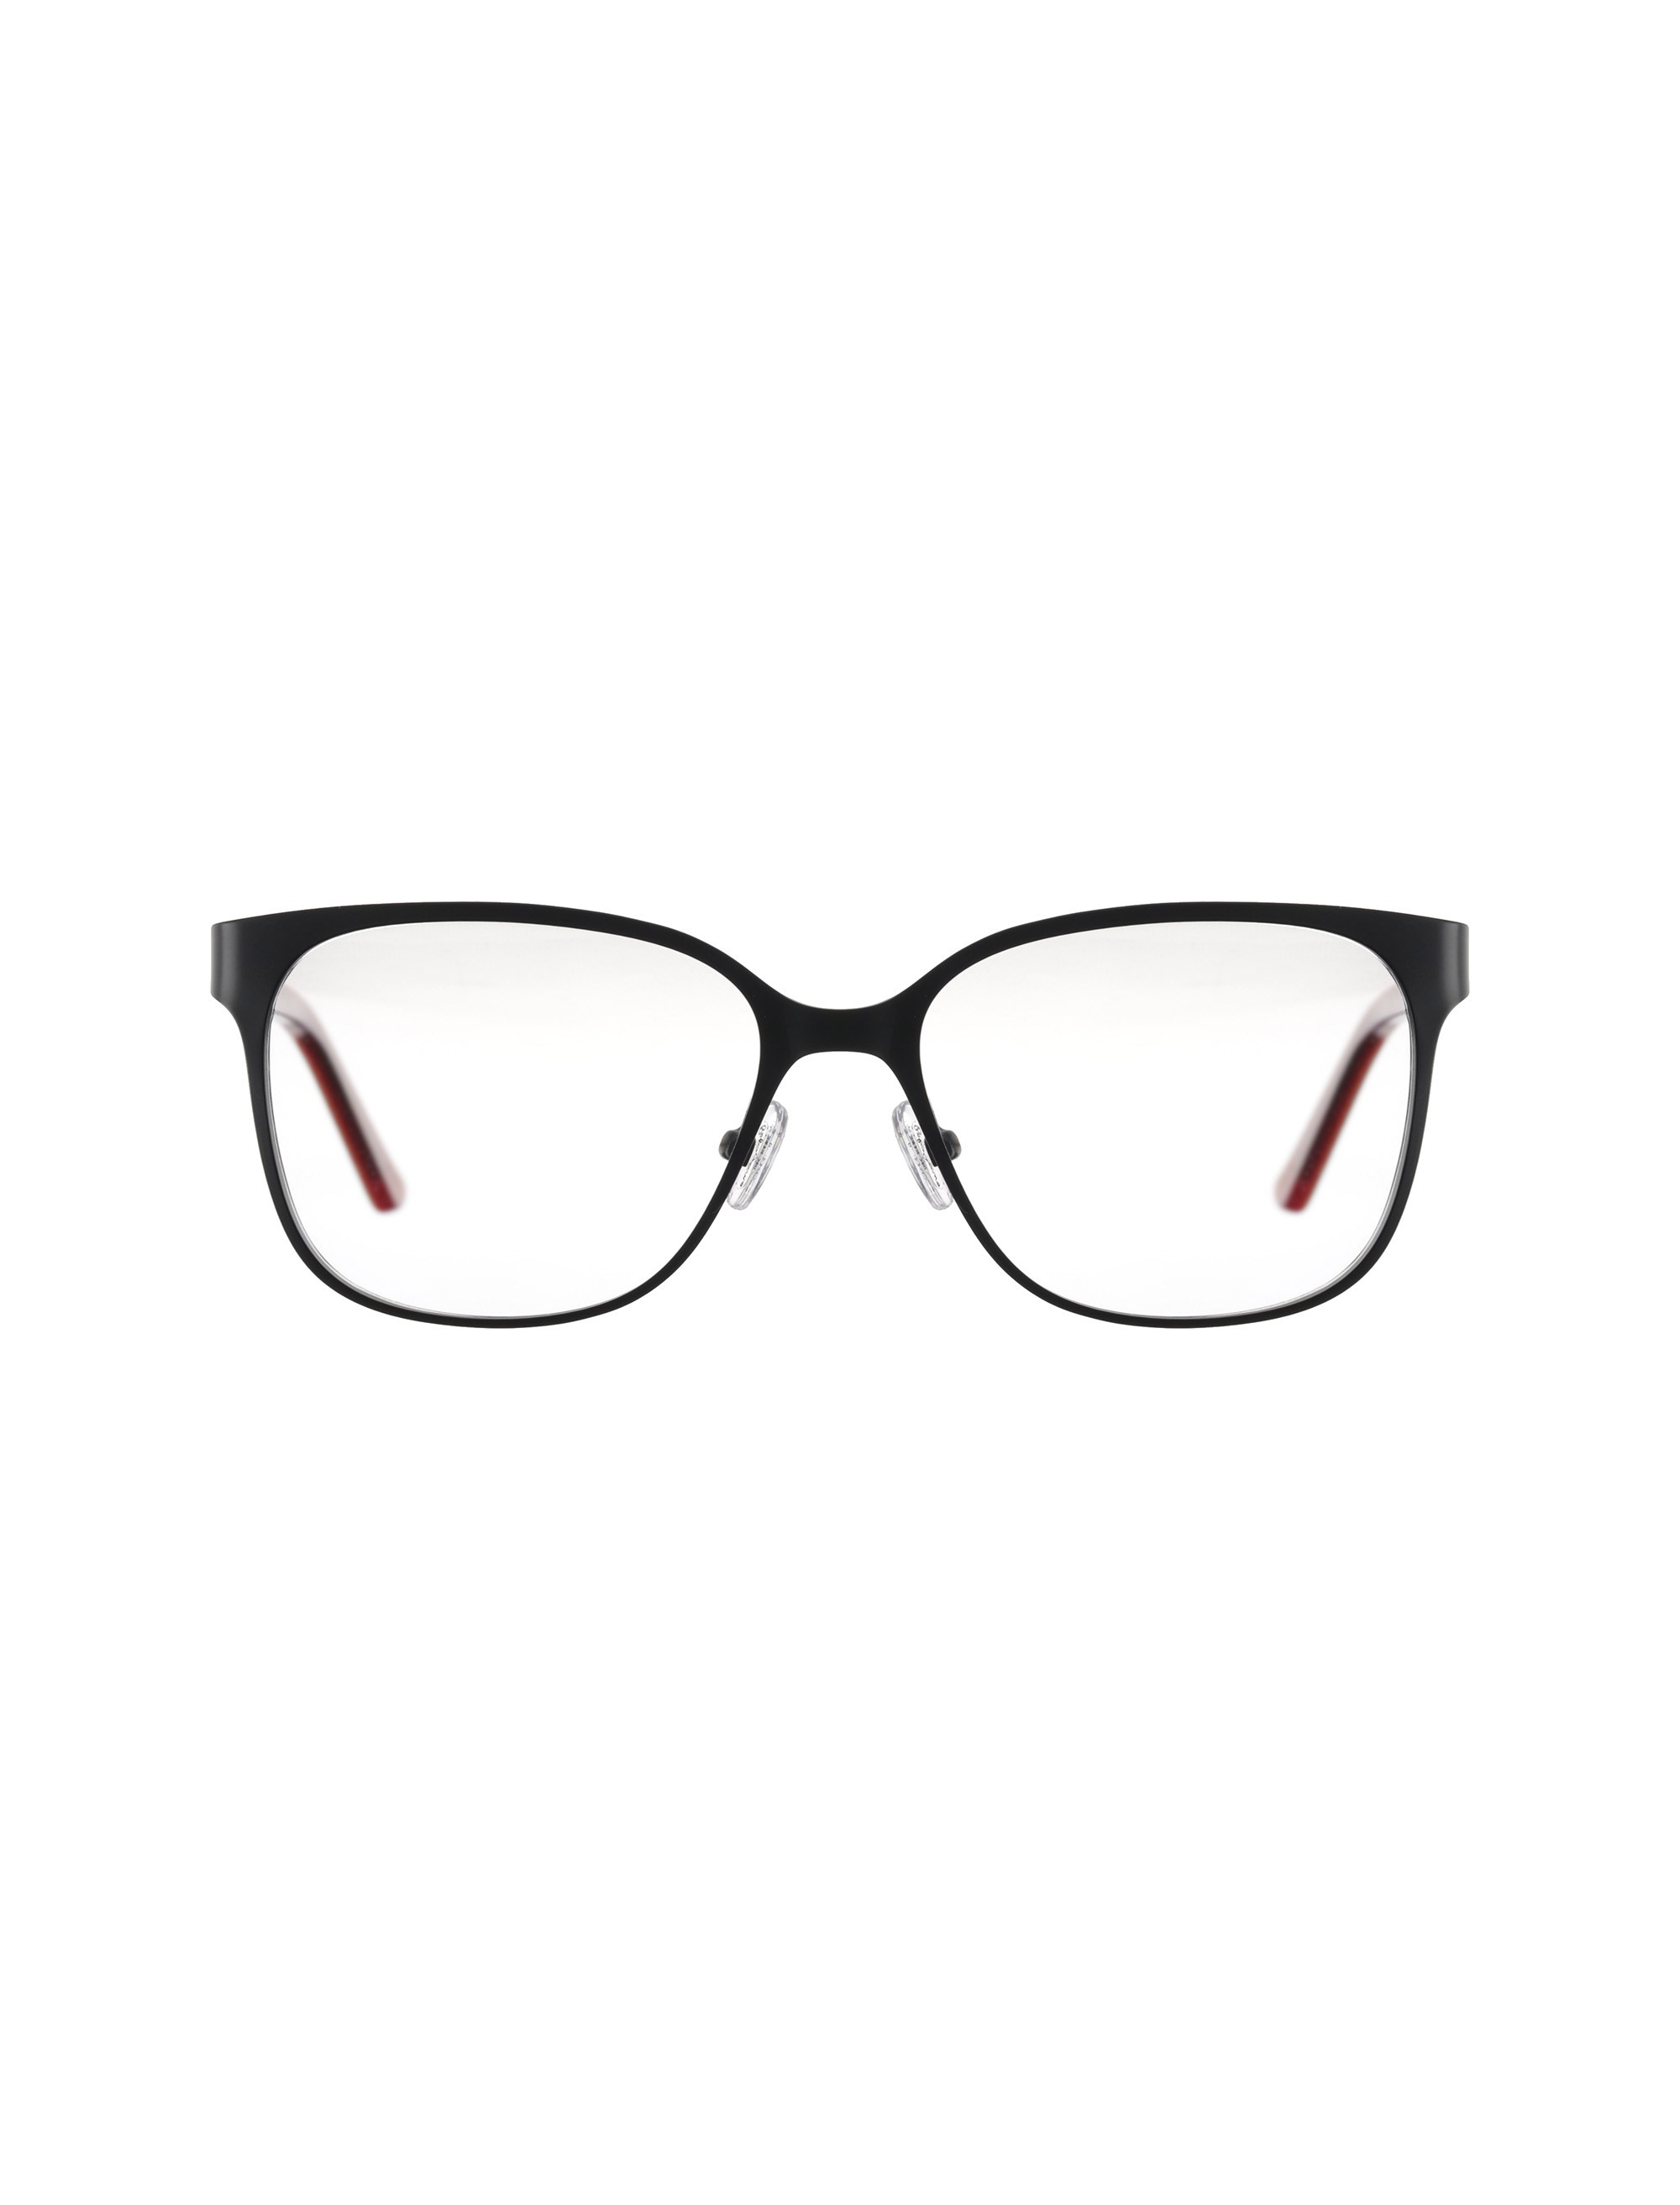 عینک طبی مربعی زنانه - پپه جینز